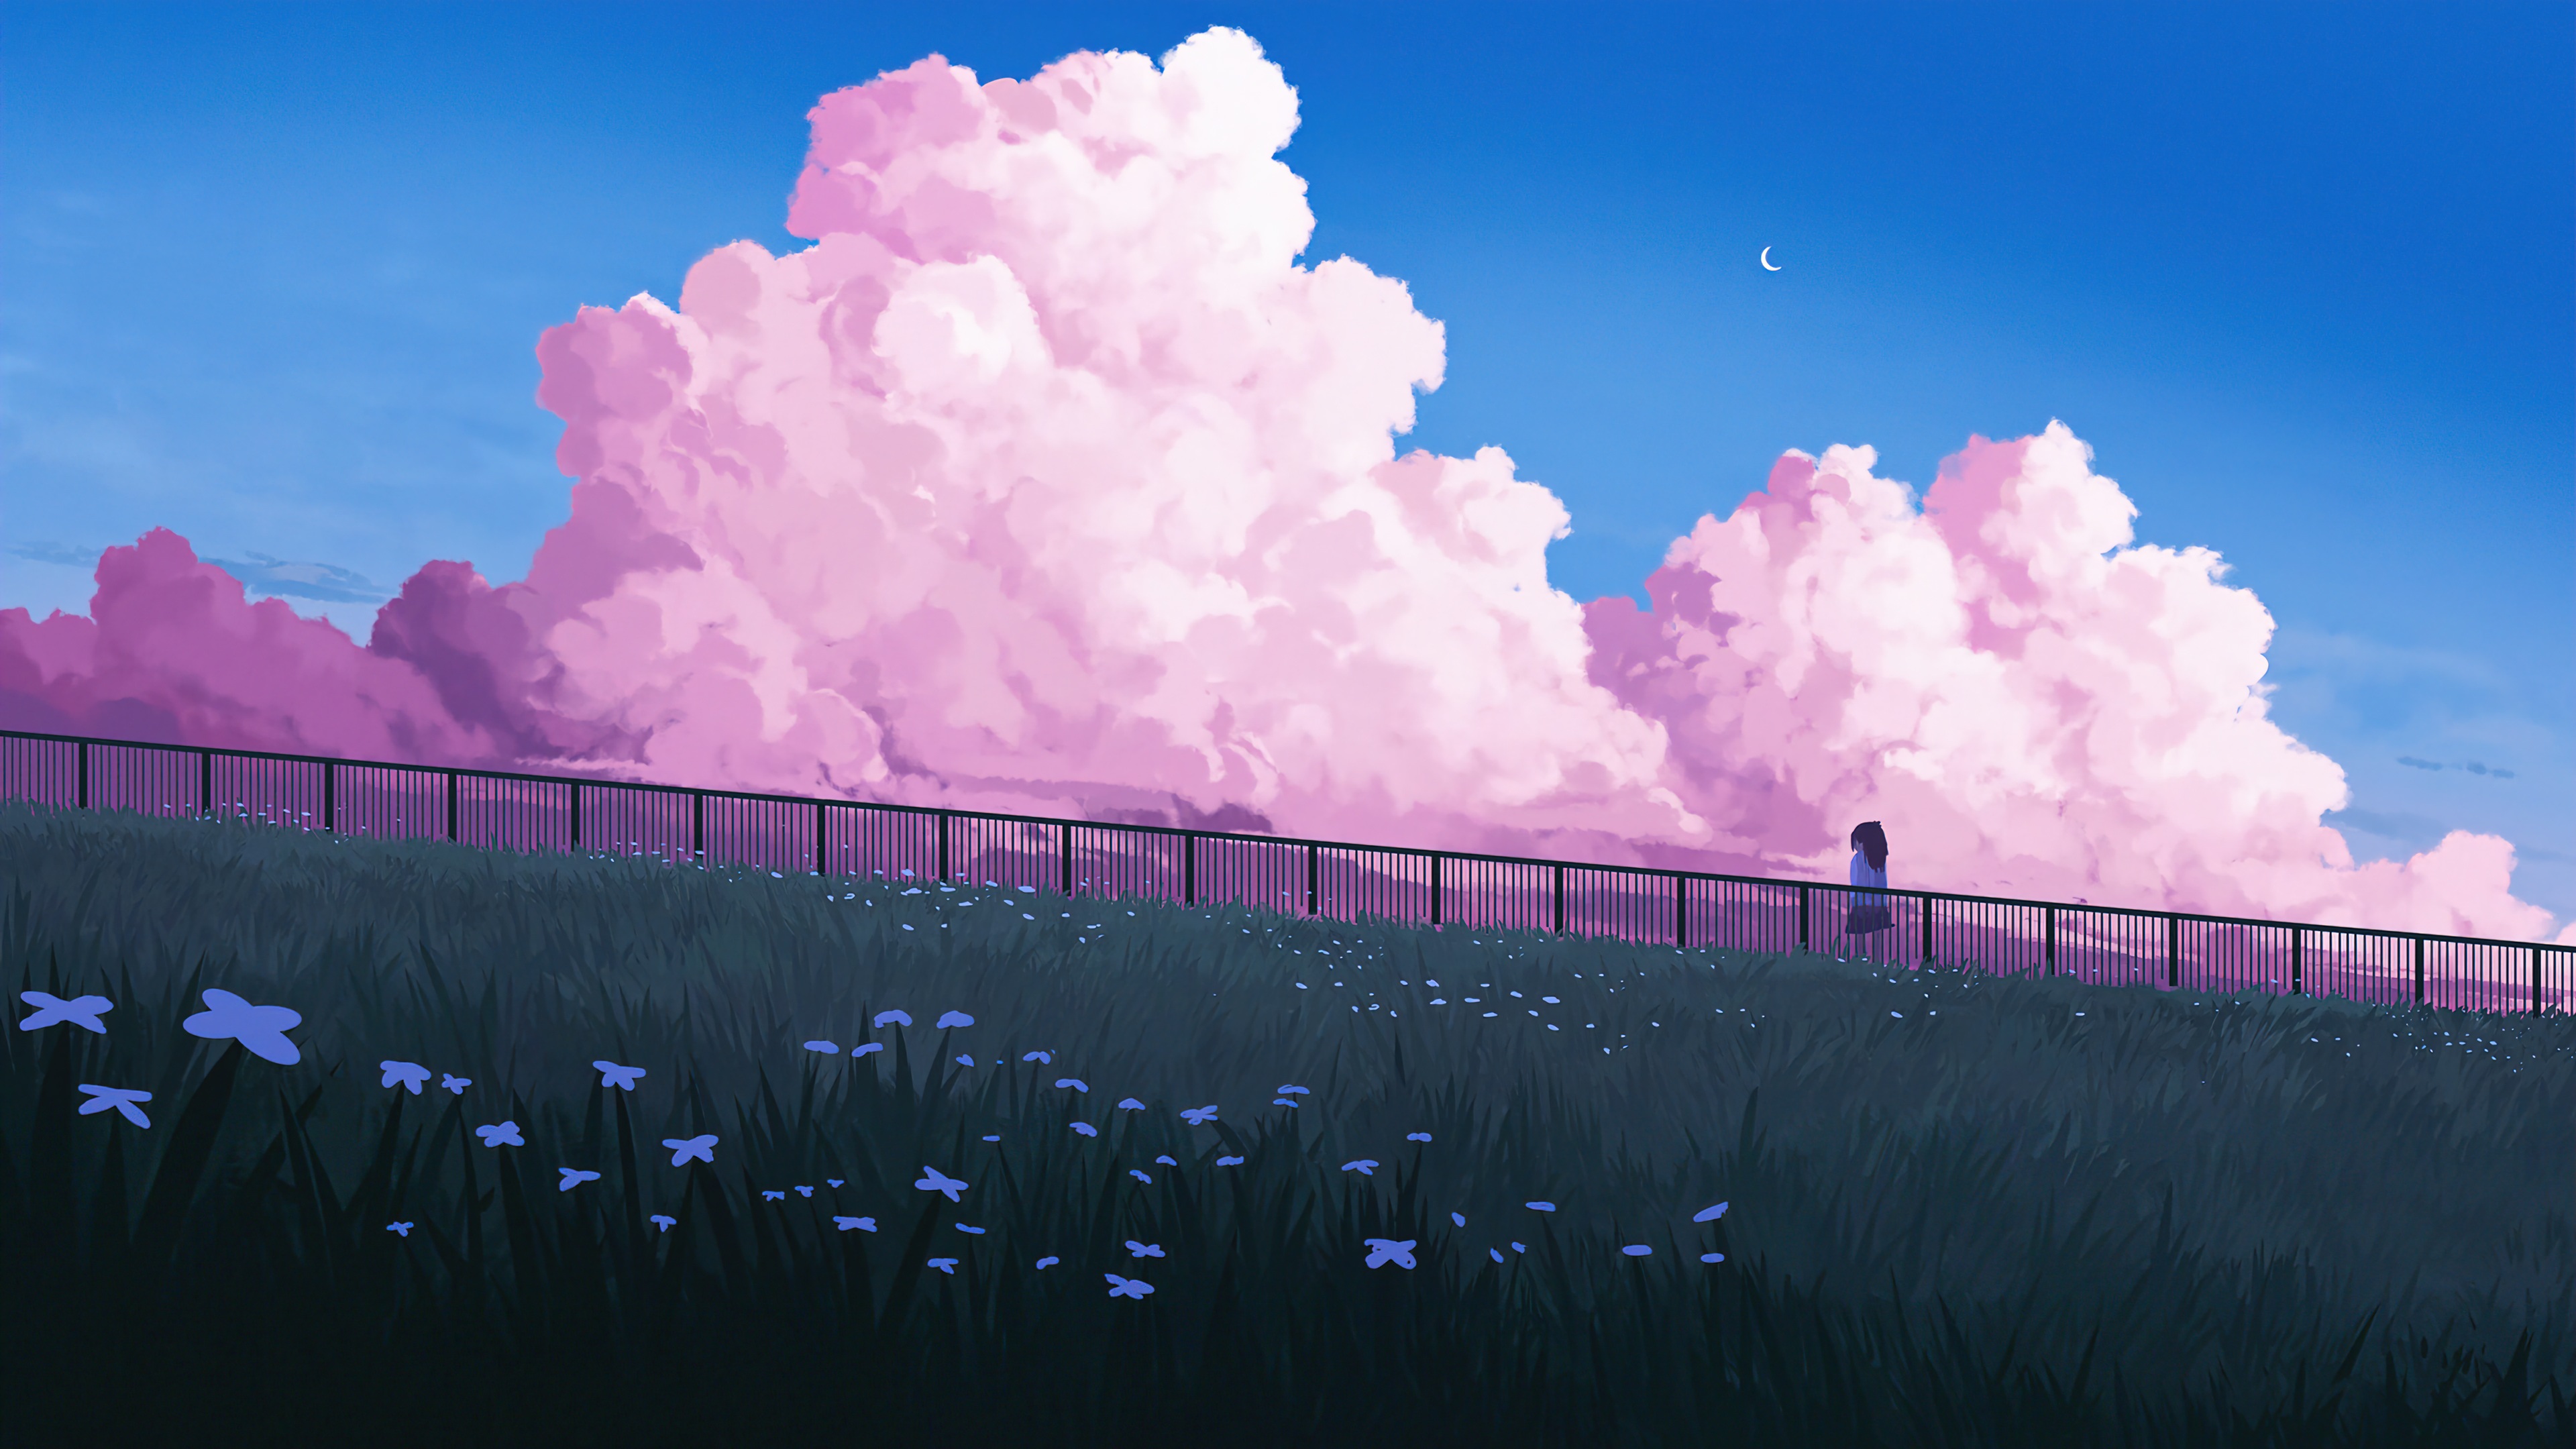 ArtStation - Anime/Ghibli inspired cloud brushes for Photoshop | Brushes